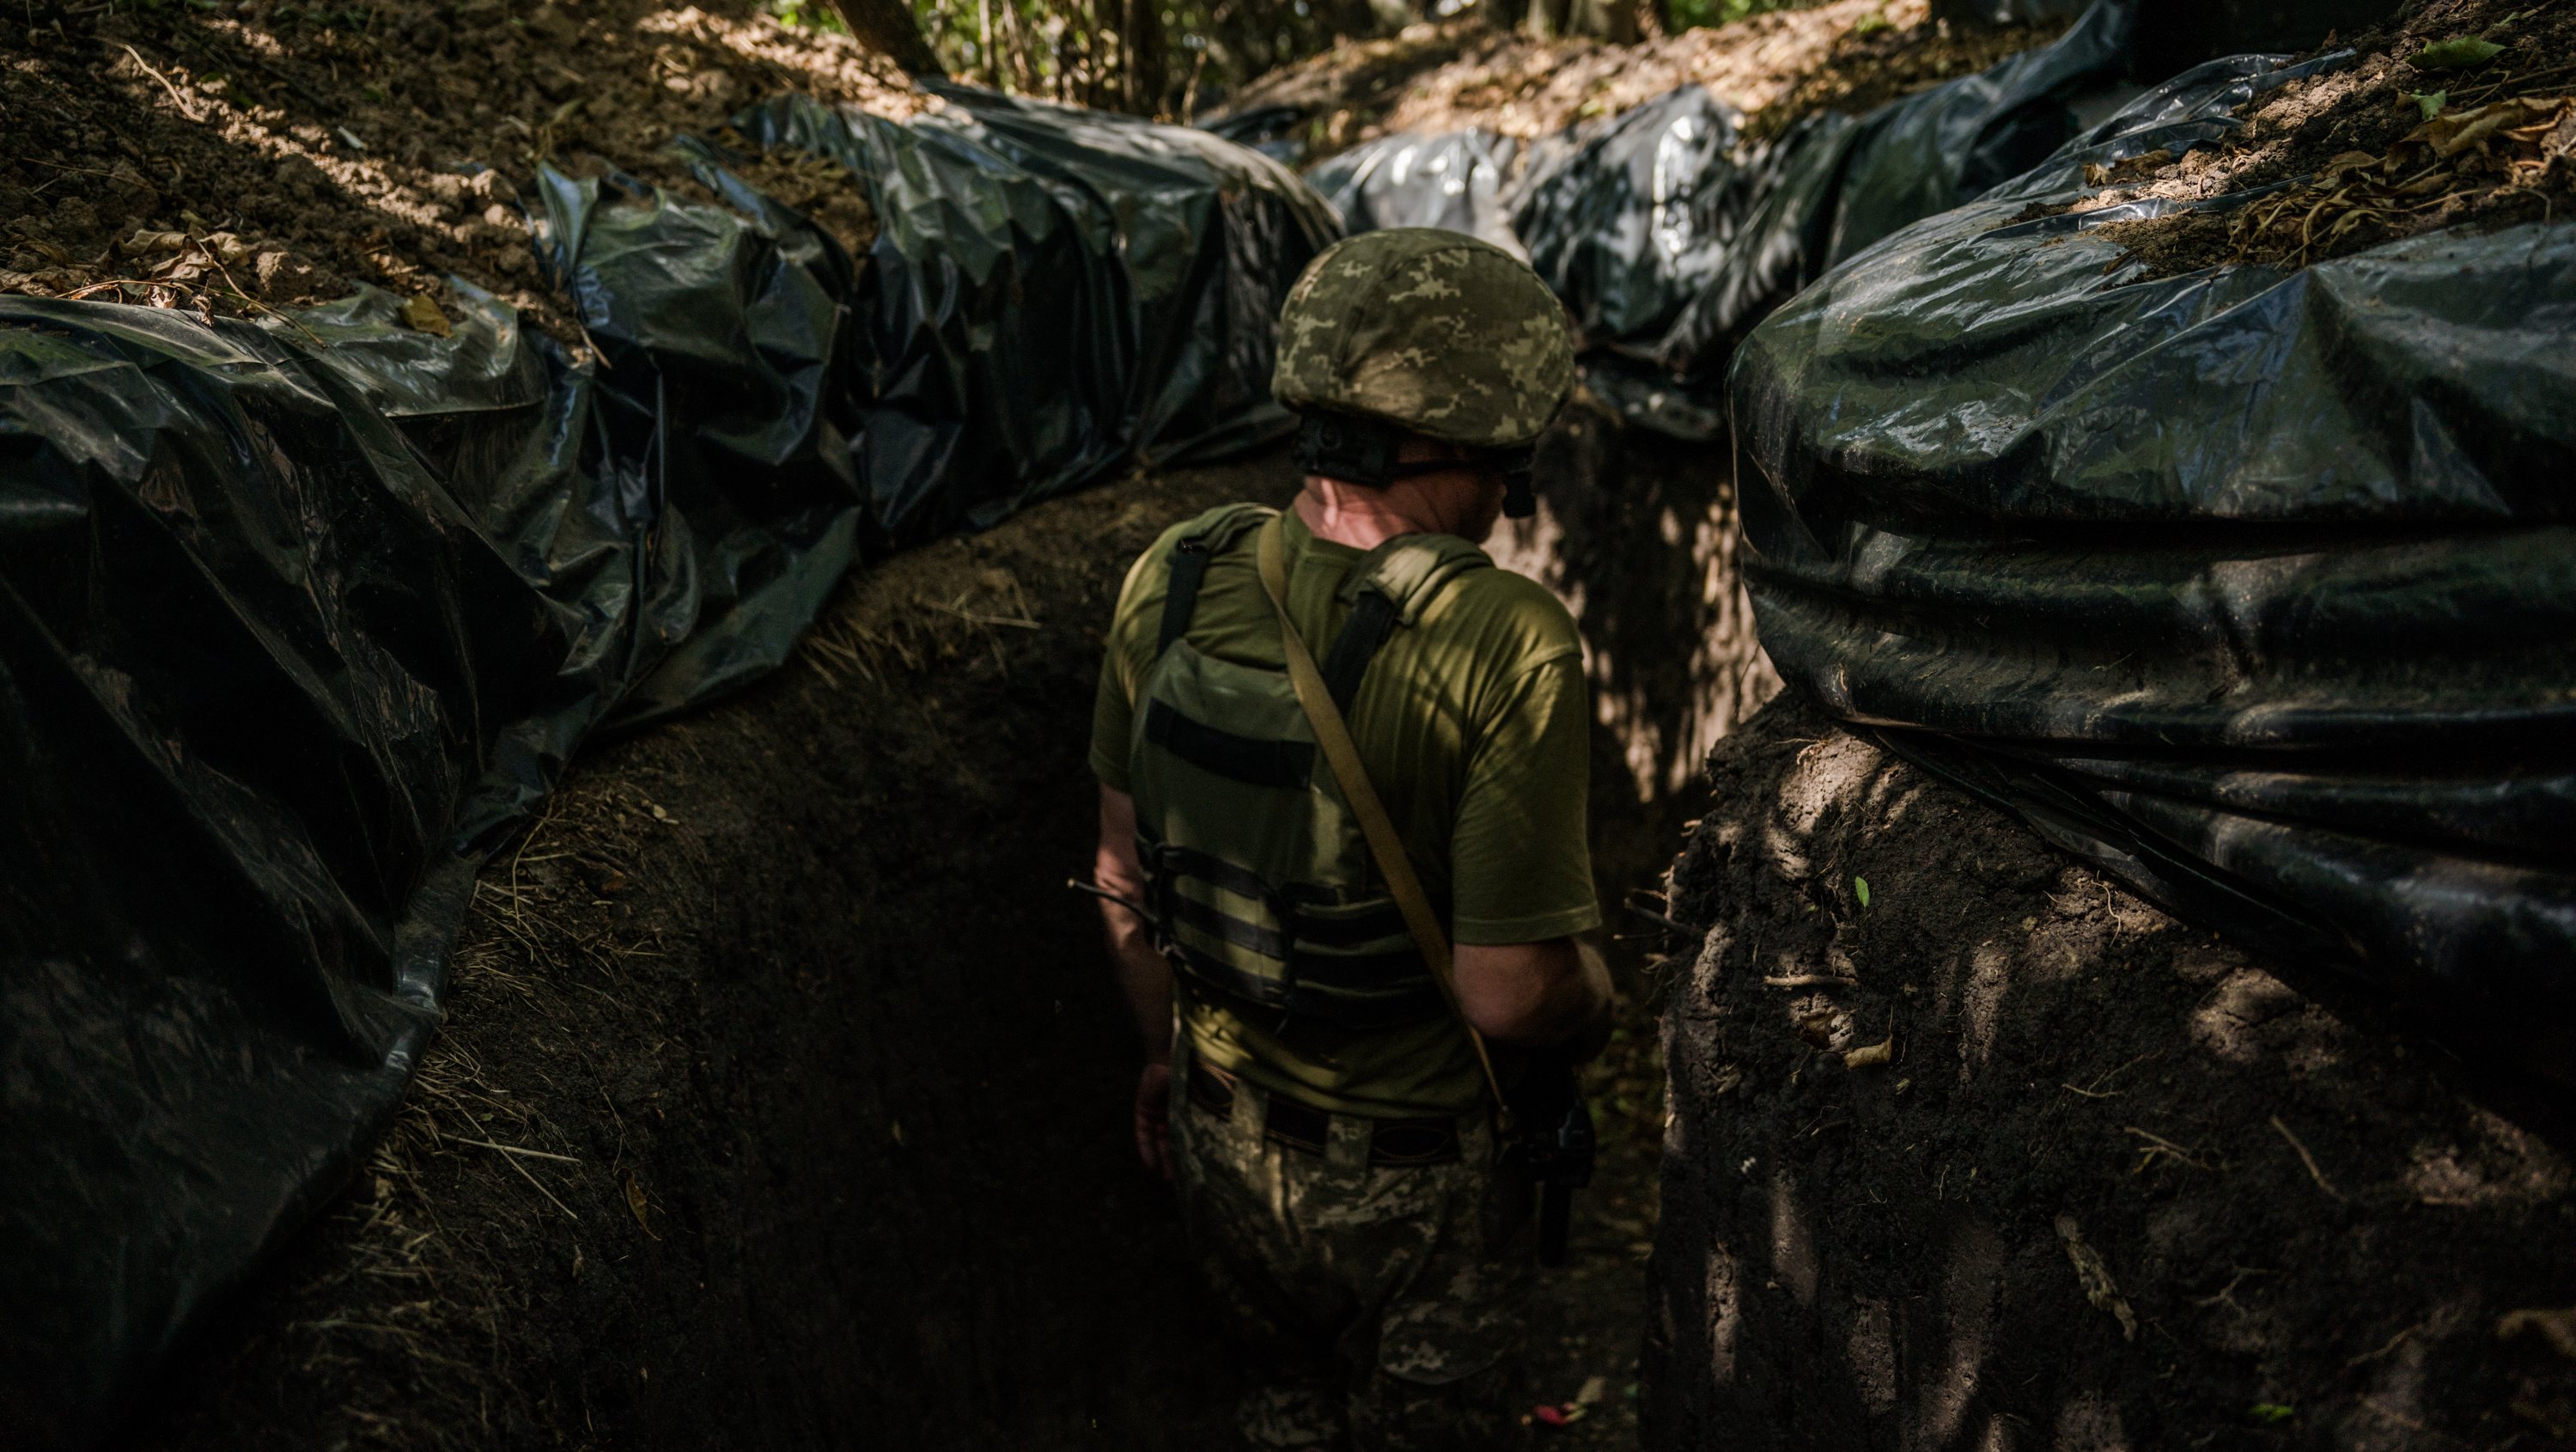 MYKOLAIV REGION, UKRAINE - AUGUST 8: A soldier, call sign Petro